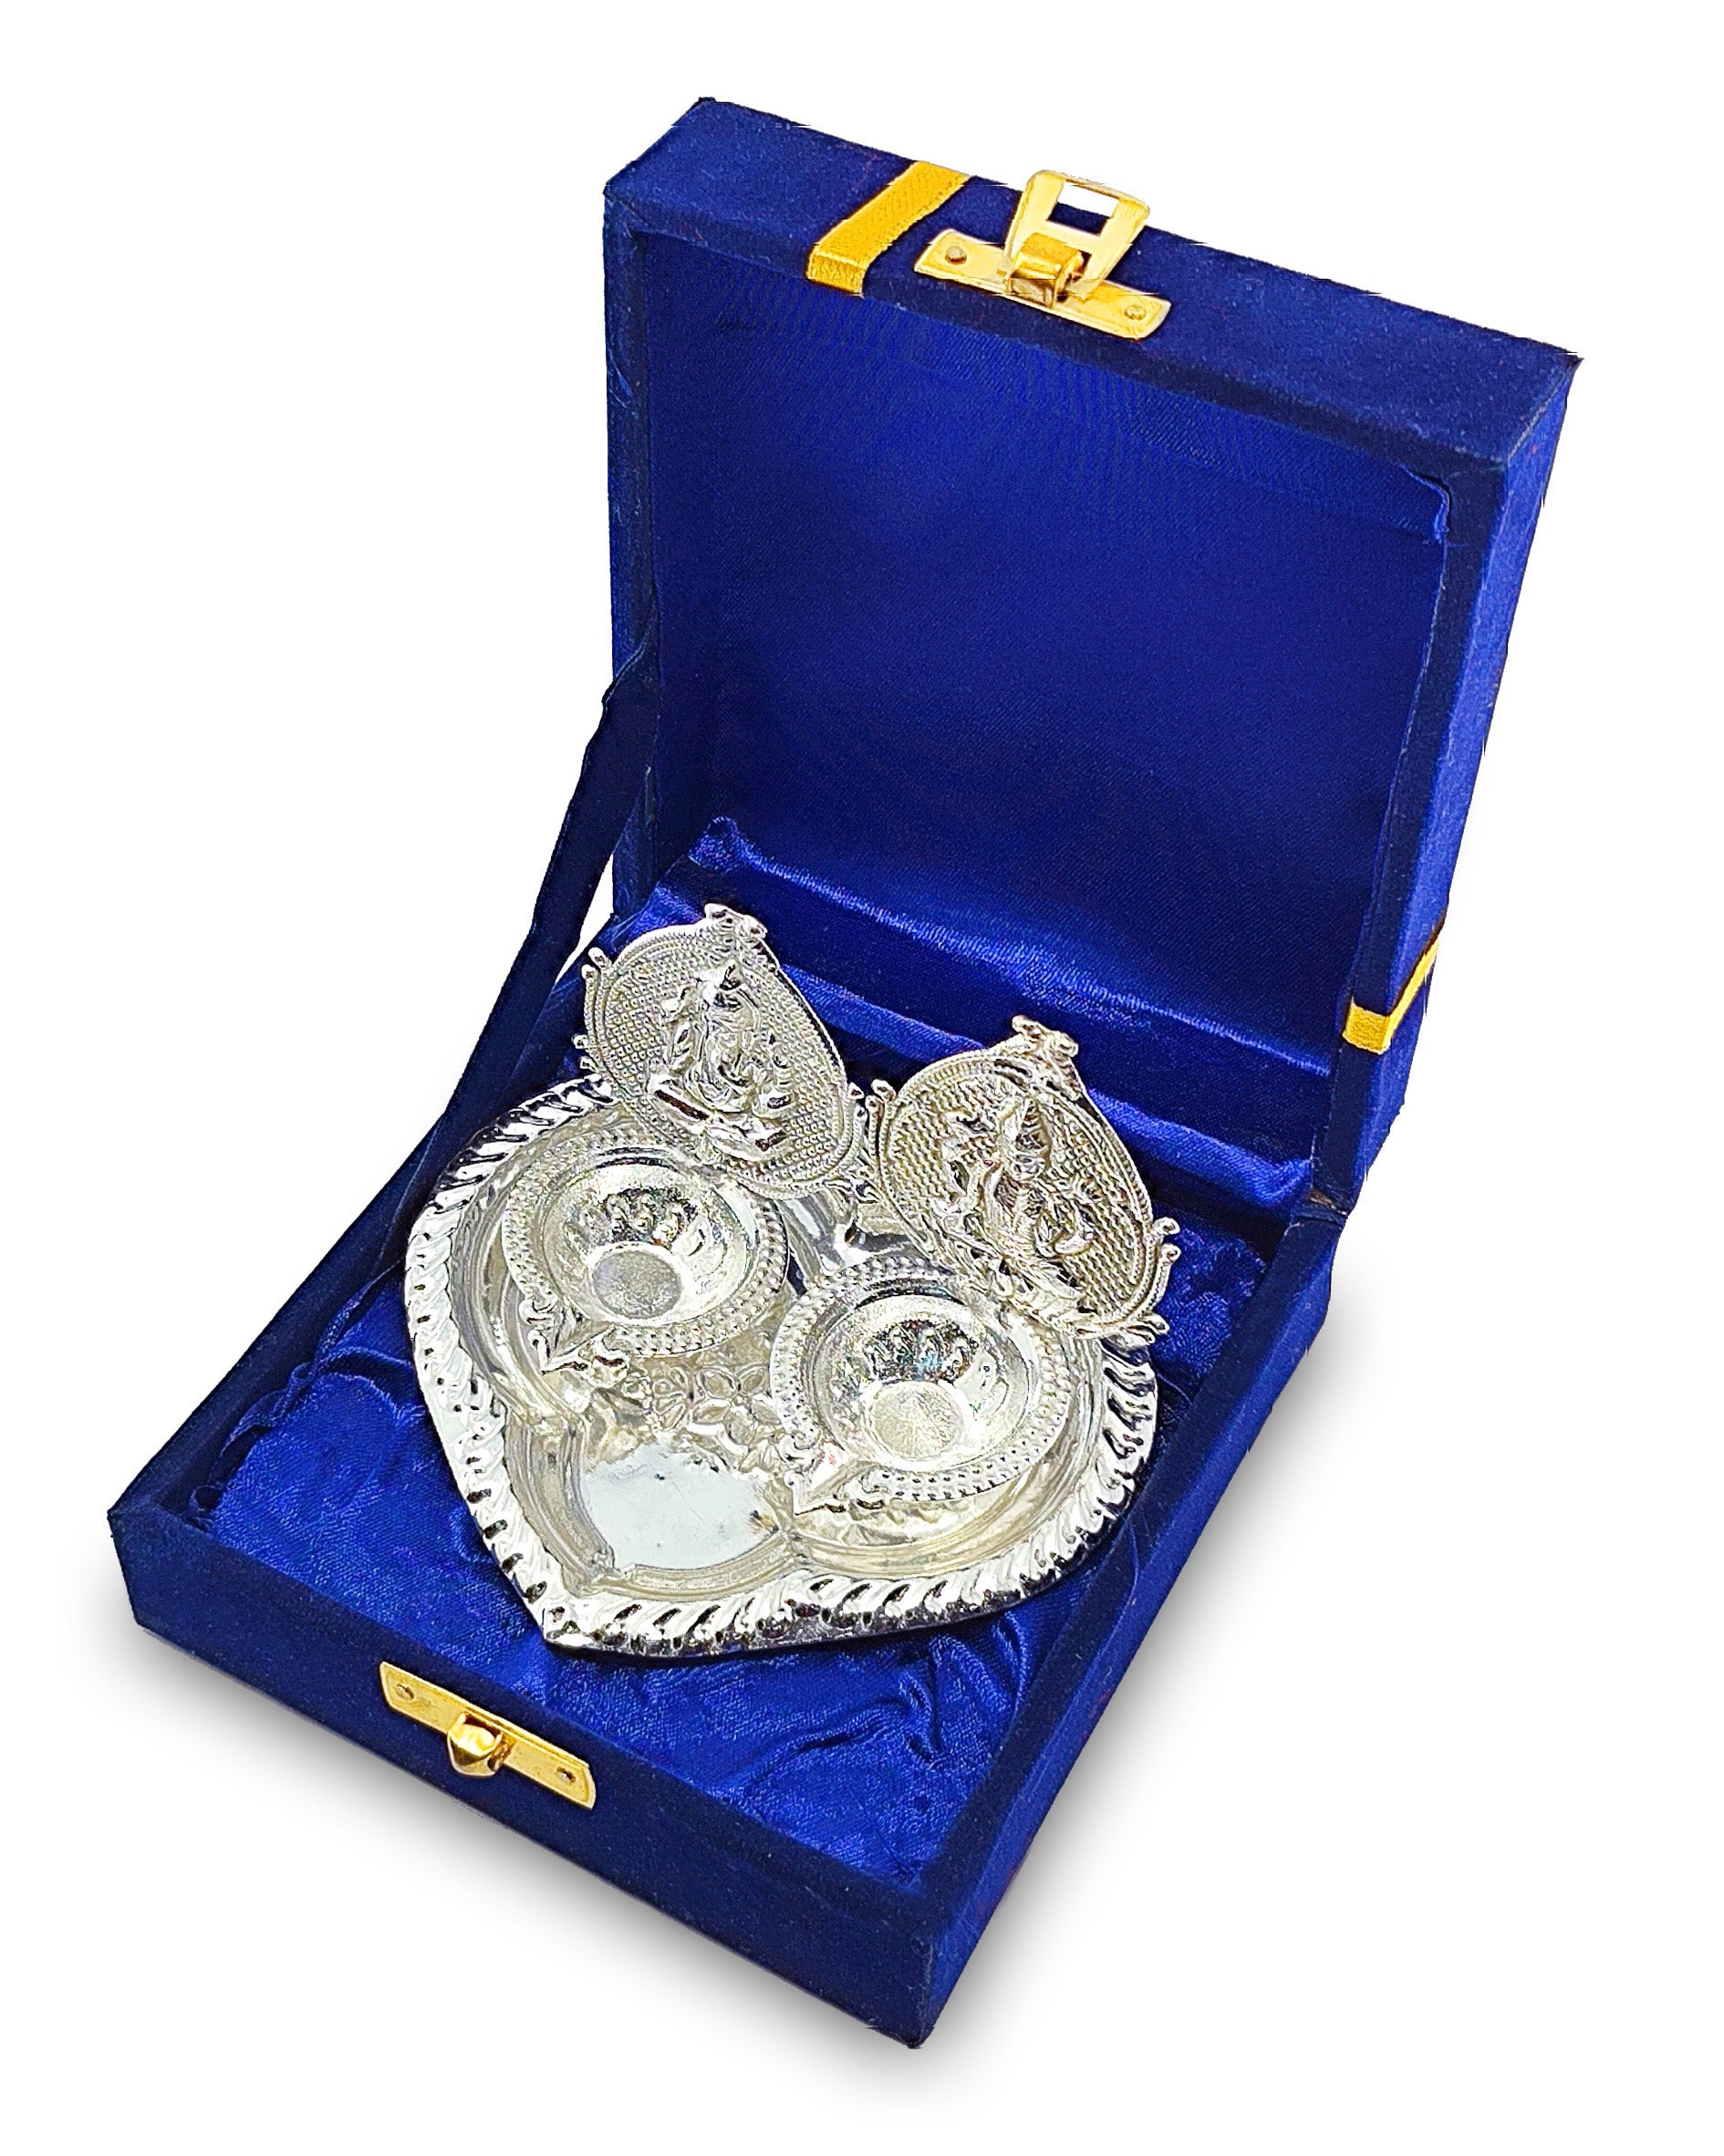 BENGALEN Silver Plated Lakshmi Ganesha Diya with Blue Velvet Gift Box Dia Pooja Items Diwali Decoration Puja Gifts Handmade Gift Items